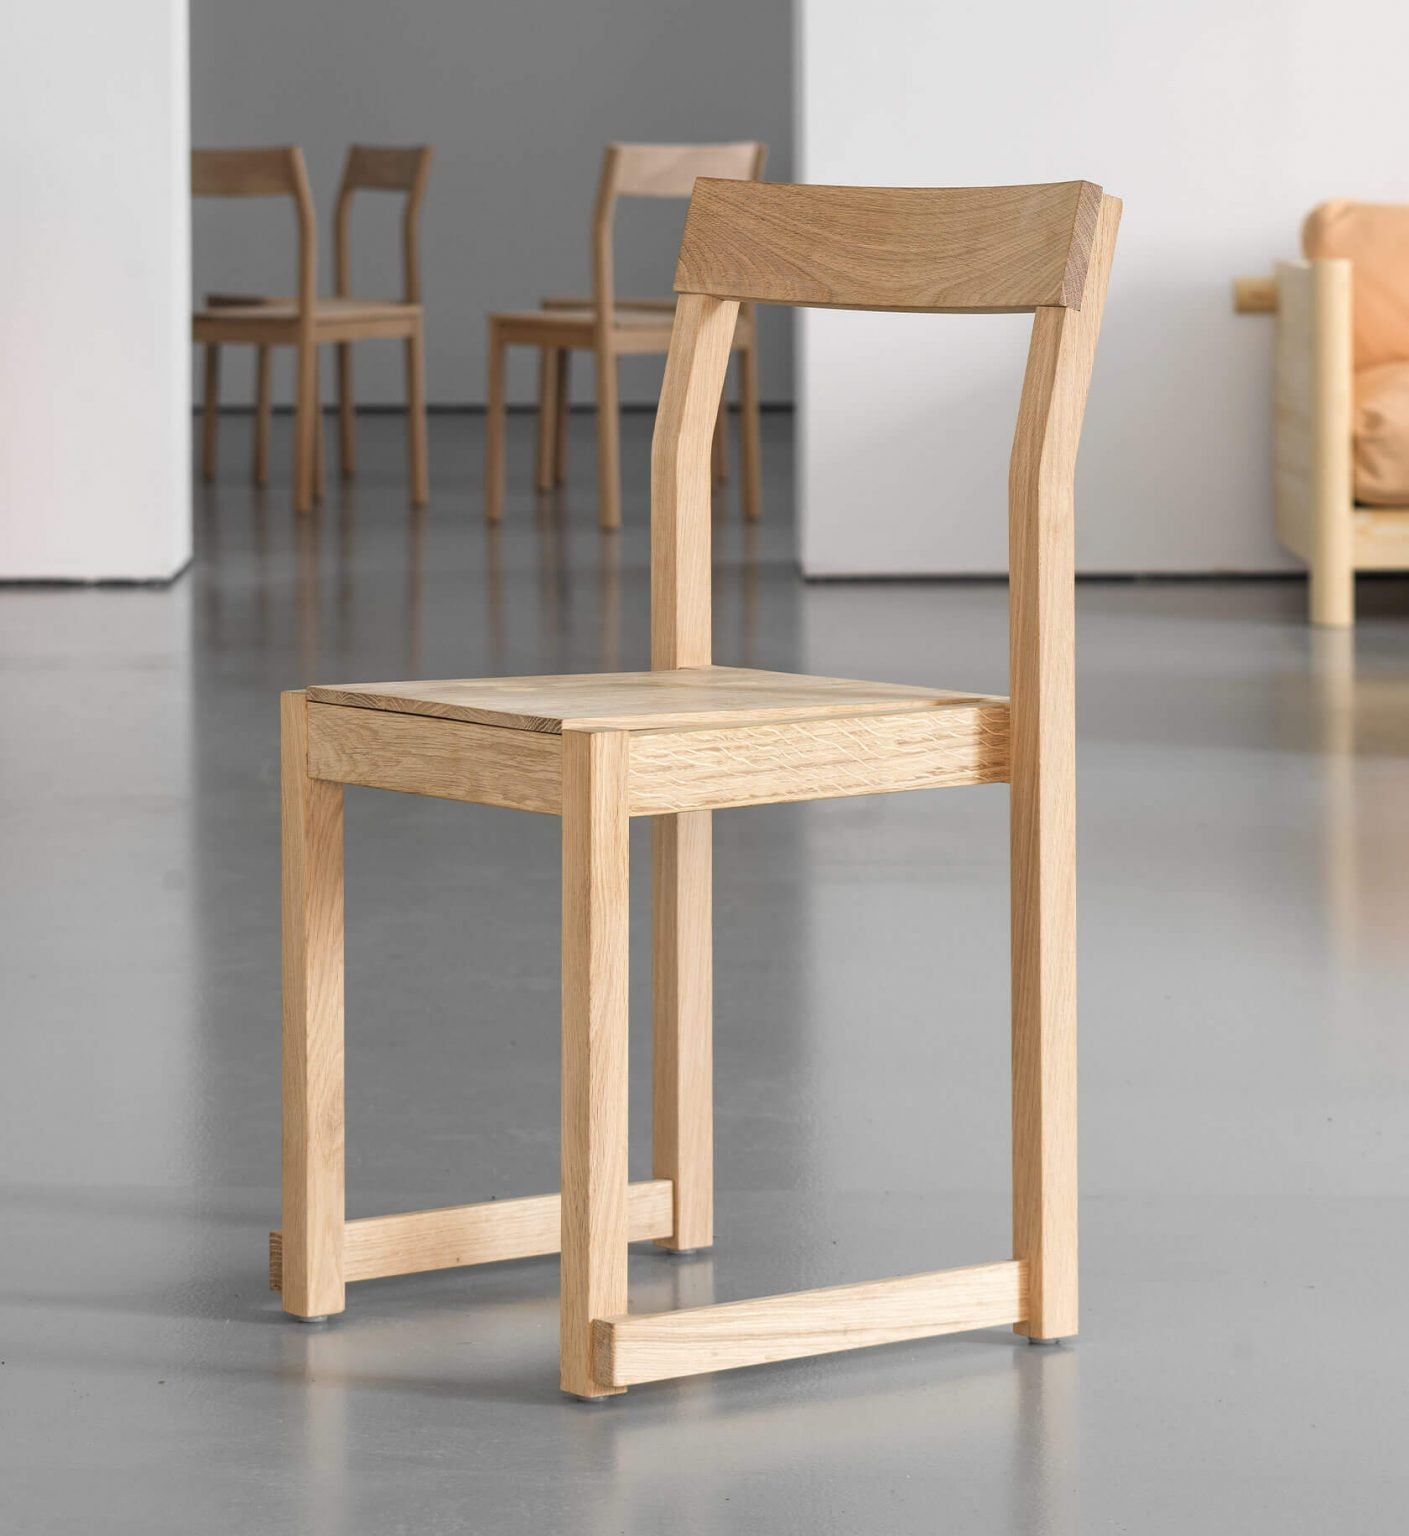 Verk - Chair V.DE.03 - David Ericsson